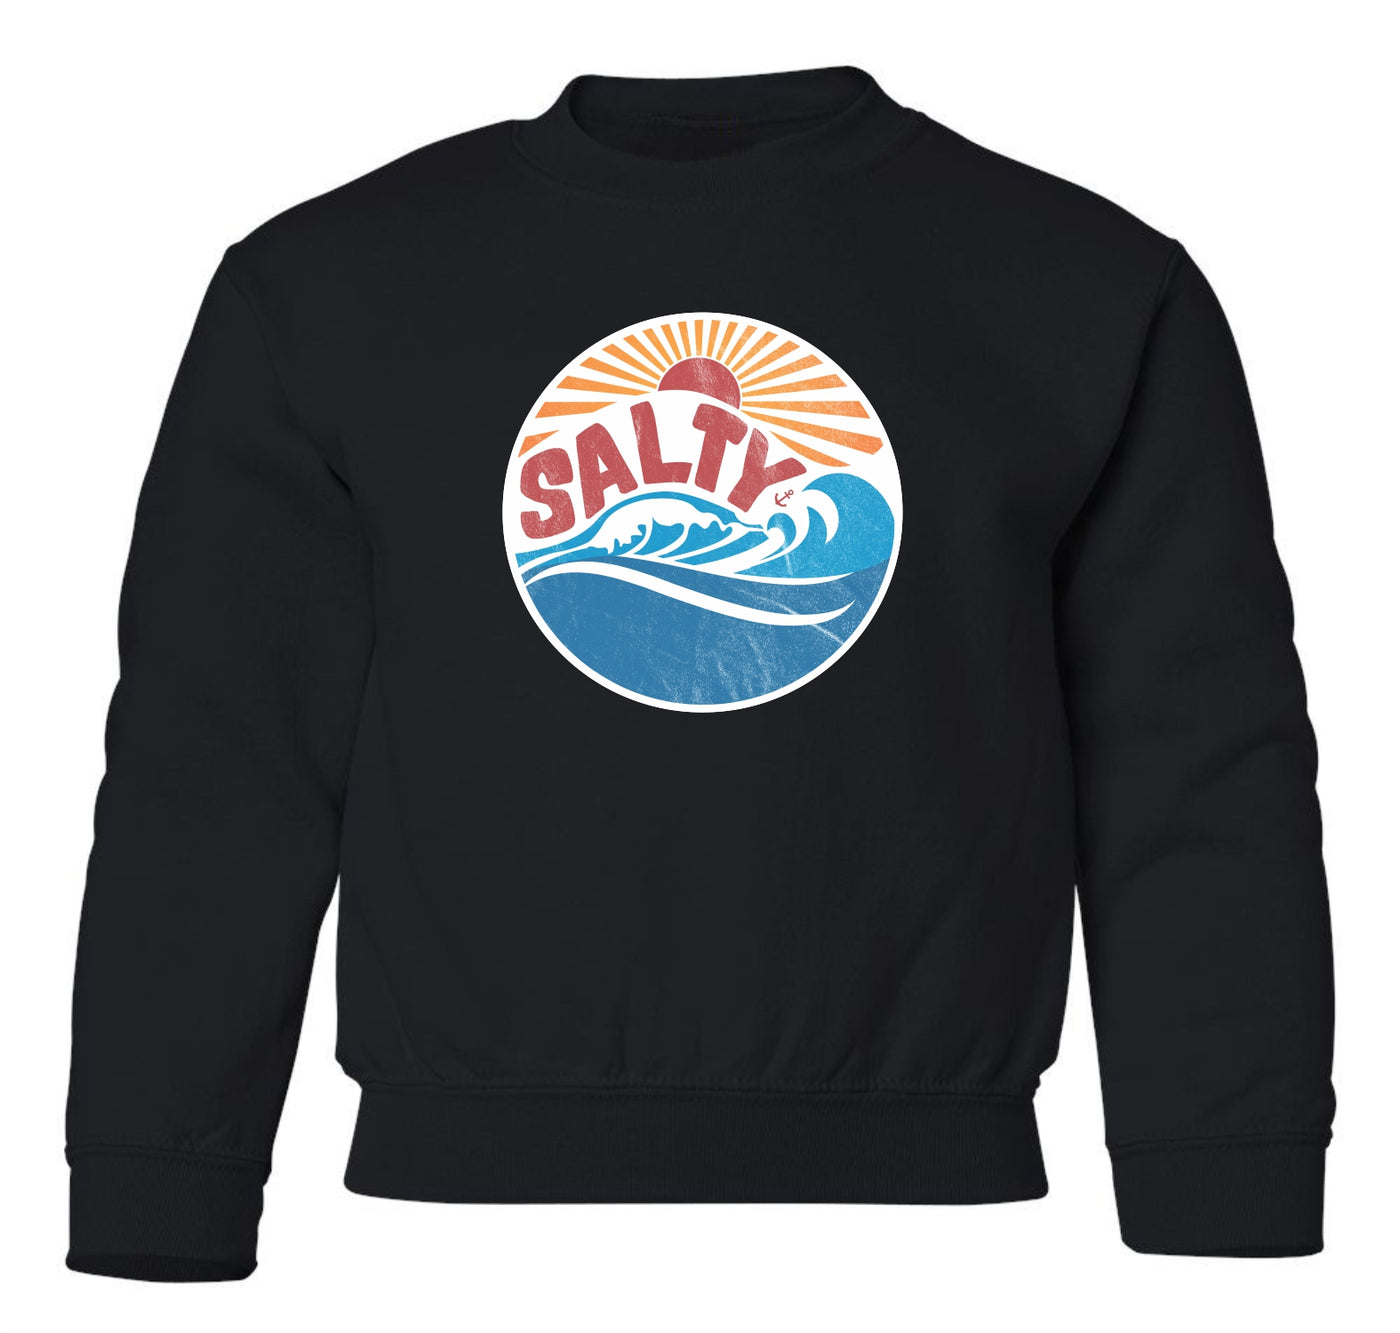 "Salty" Waves Toddler/Youth Crewneck Sweatshirt